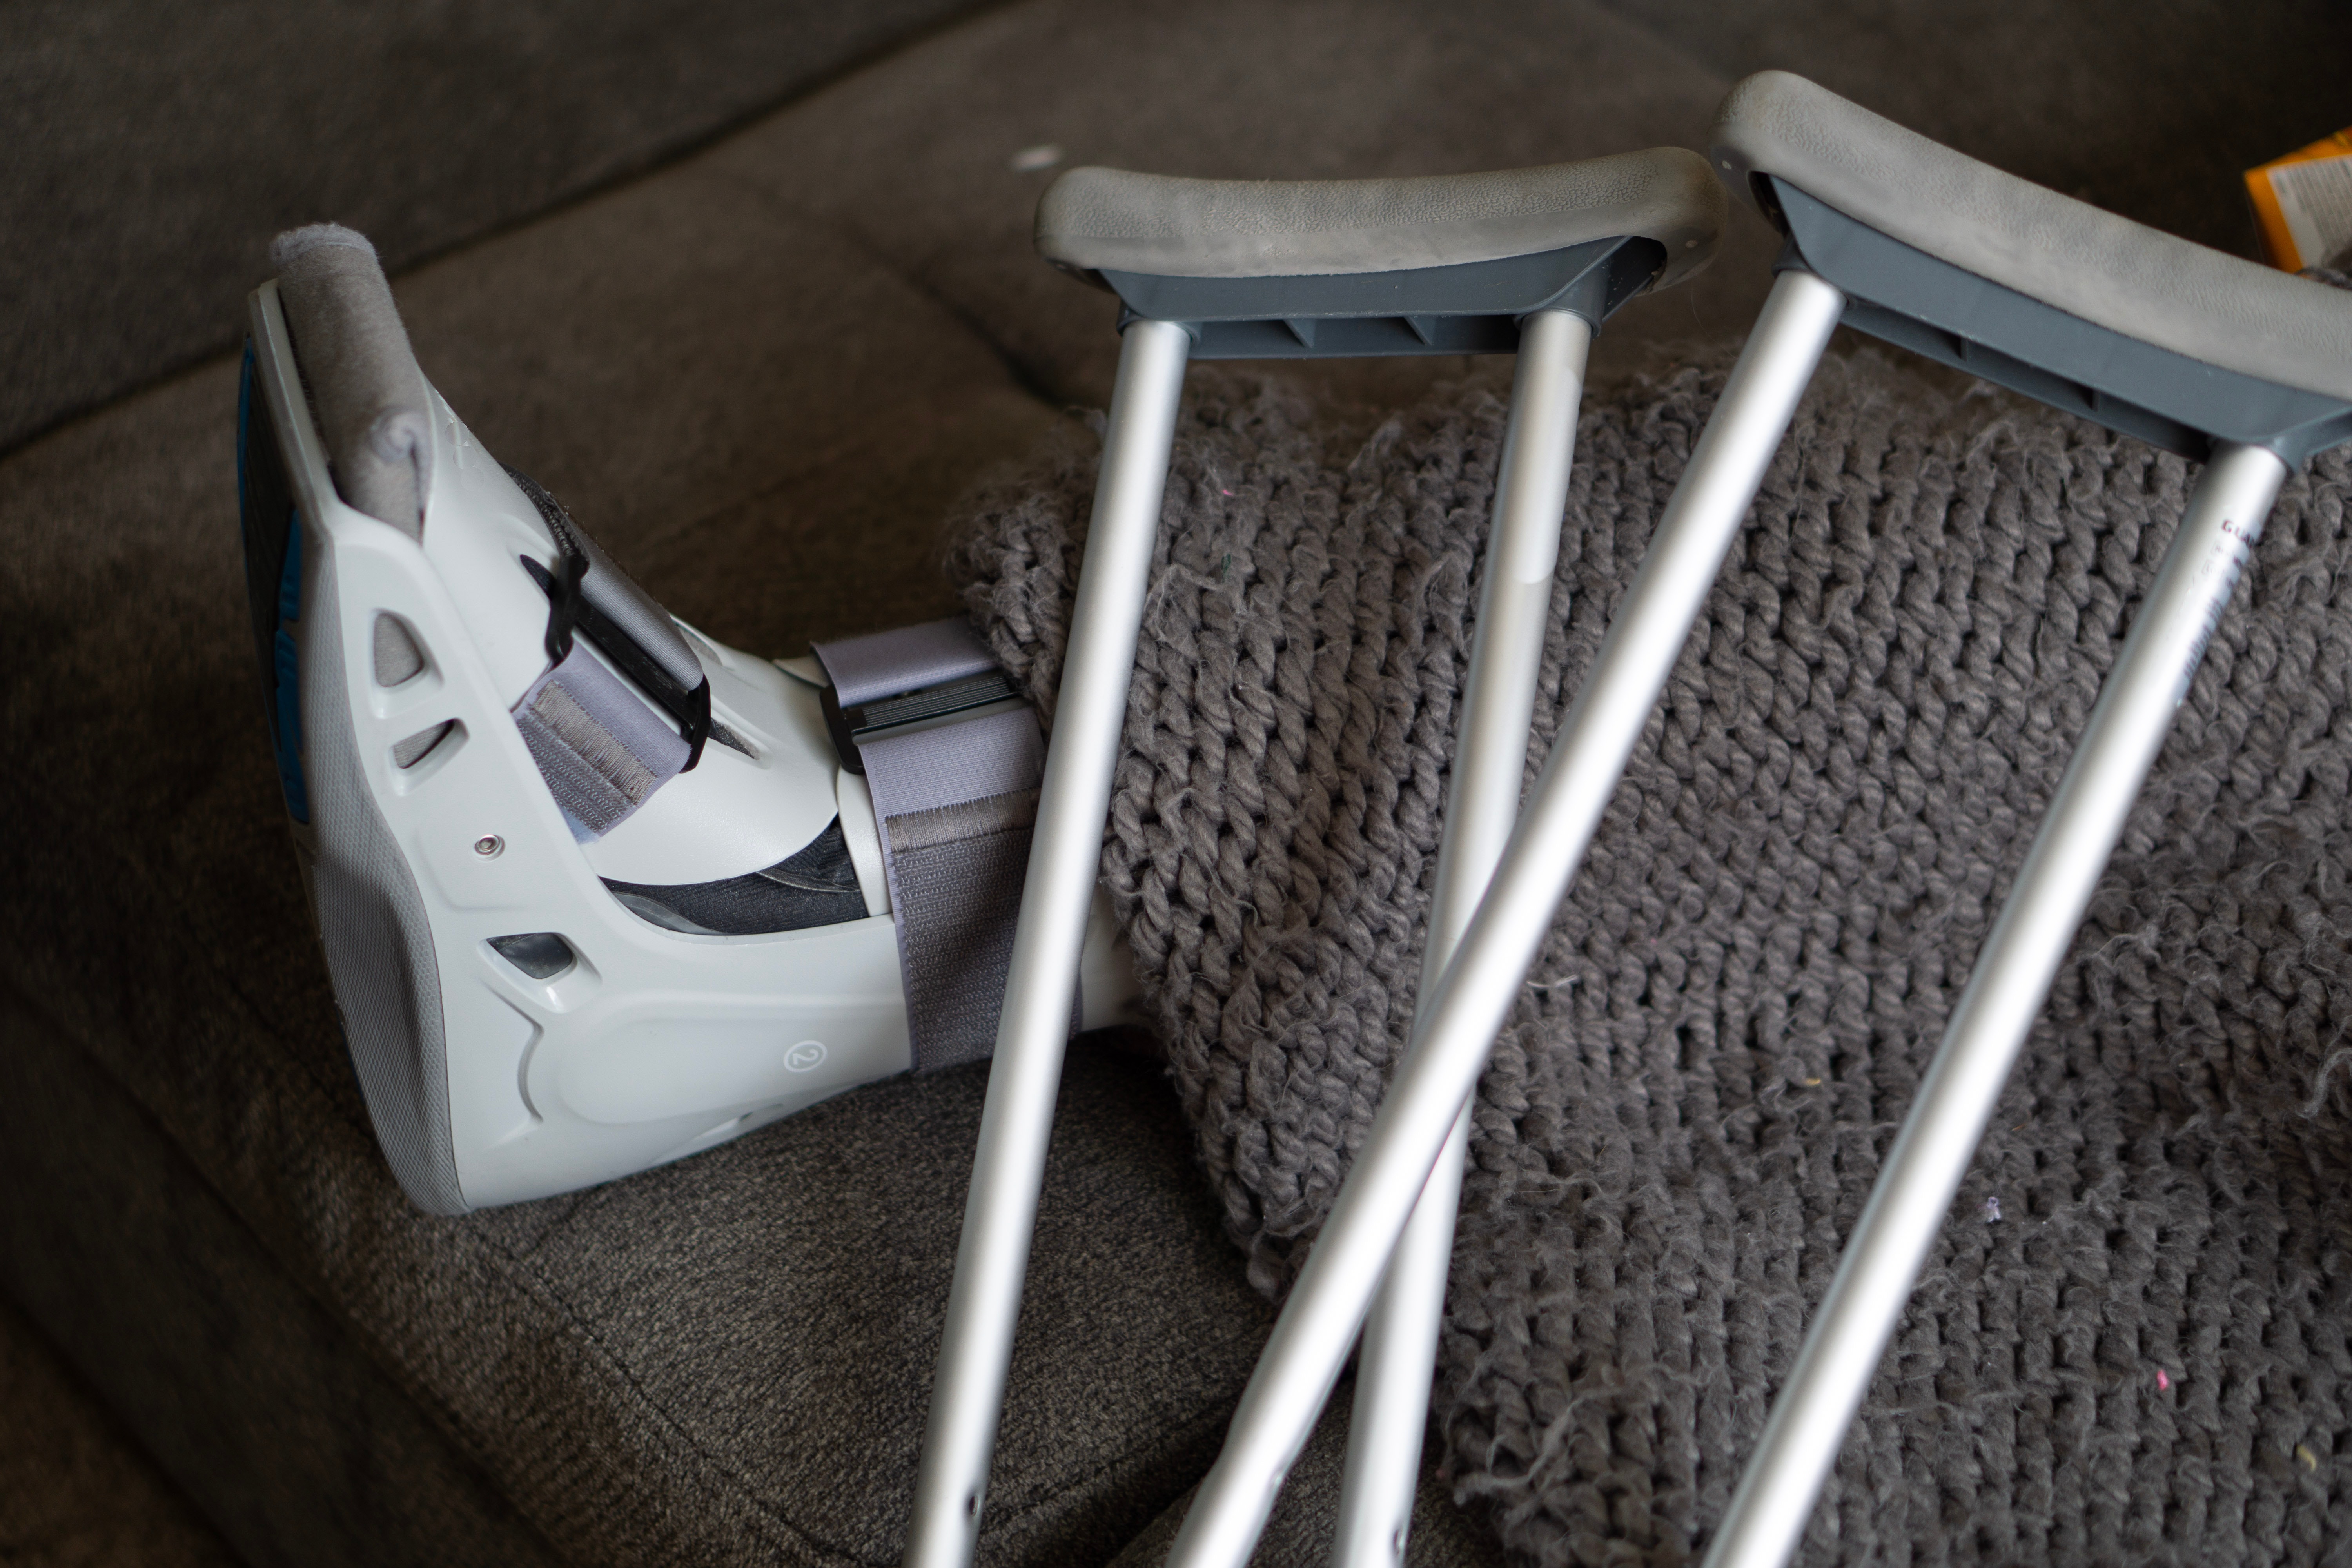 crutches resting on a broken leg